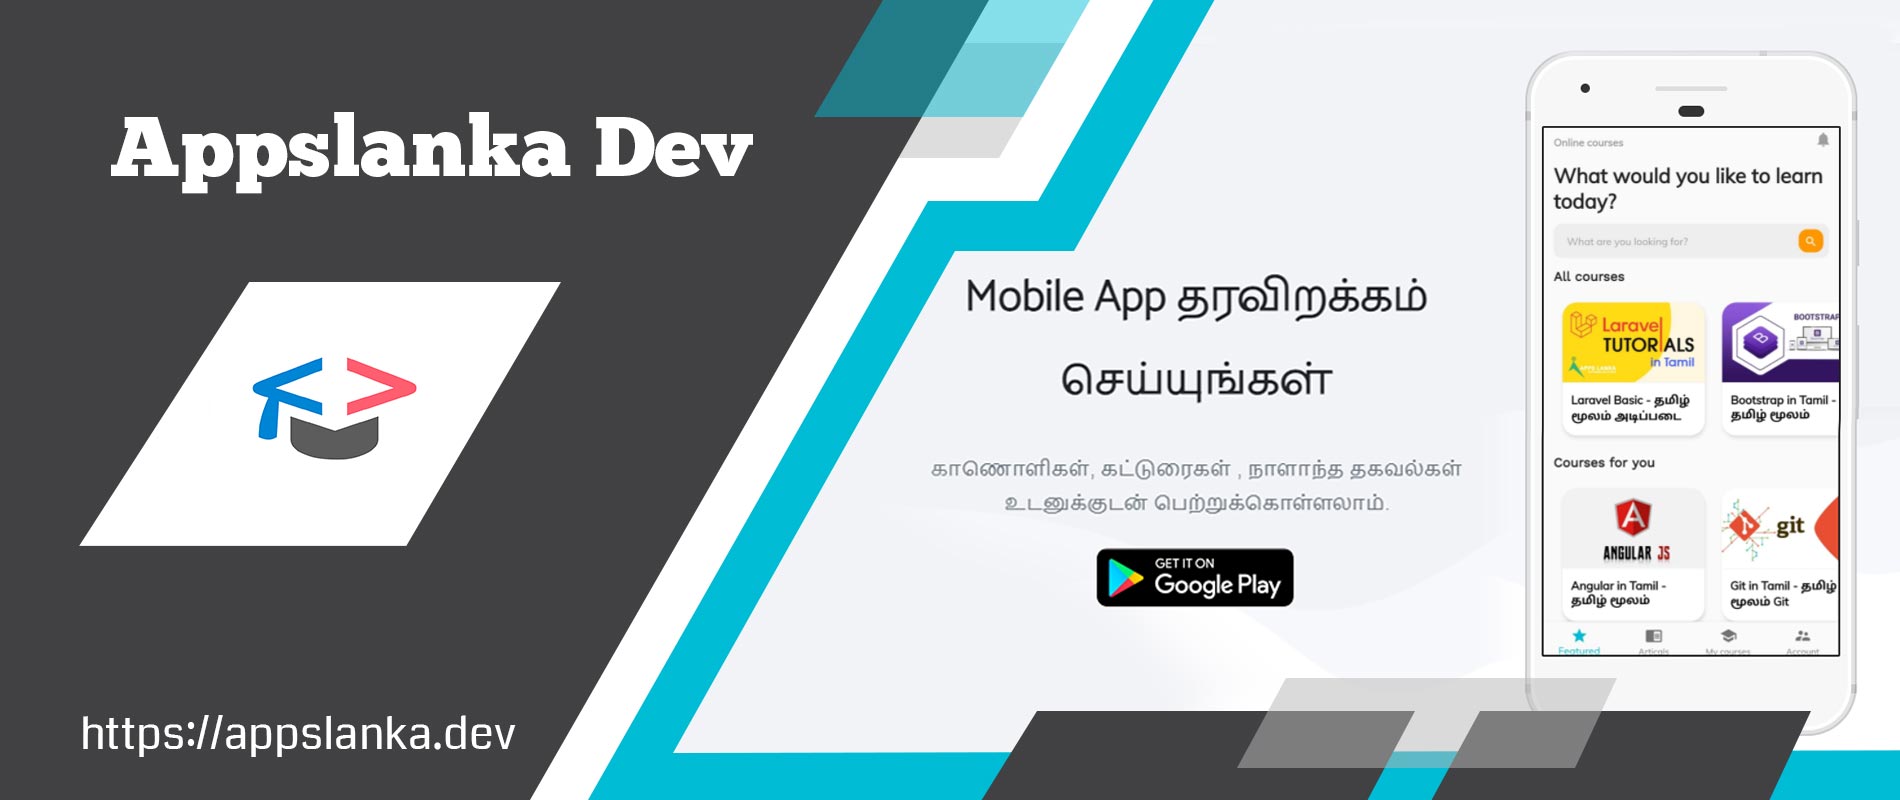 Apps Lanka Learning Platform (Appslanka.dev)